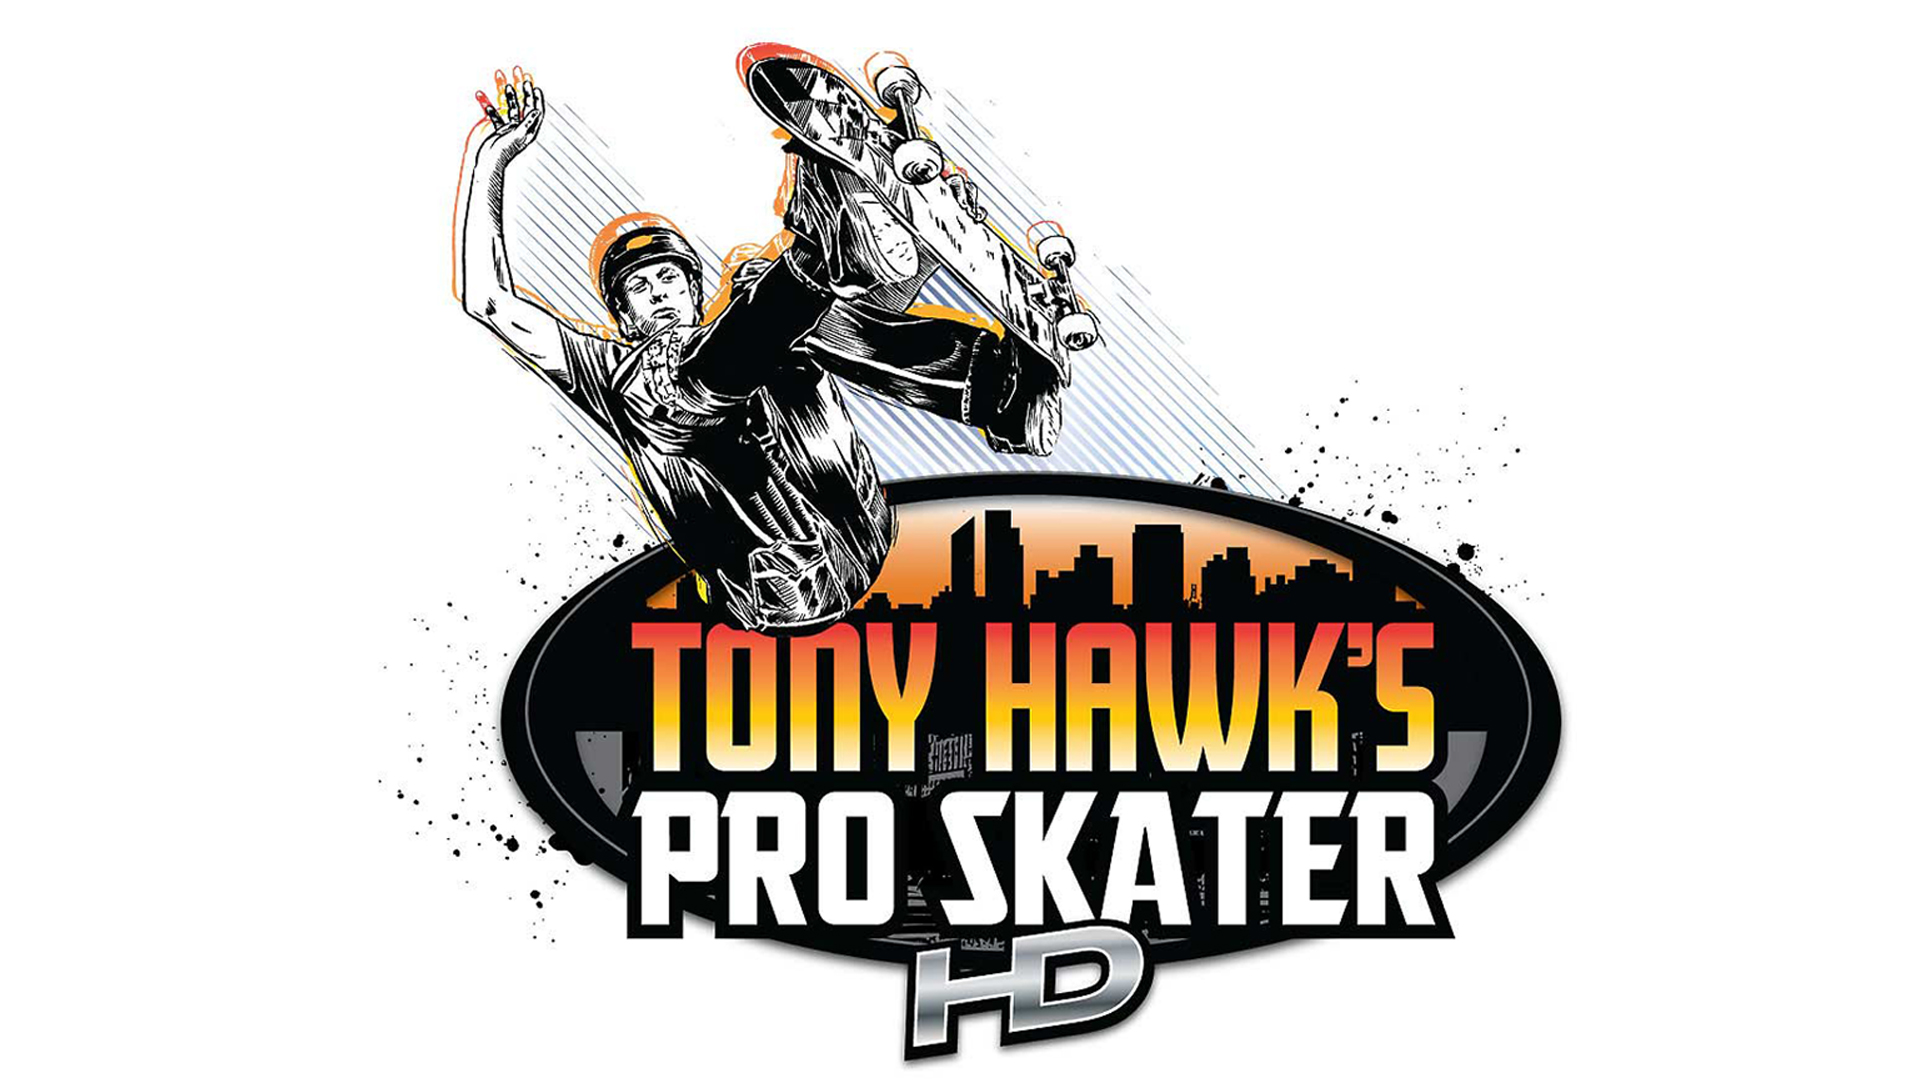 8 Tony Hawk's Pro Skater HD HD Wallpapers | Backgrounds ...